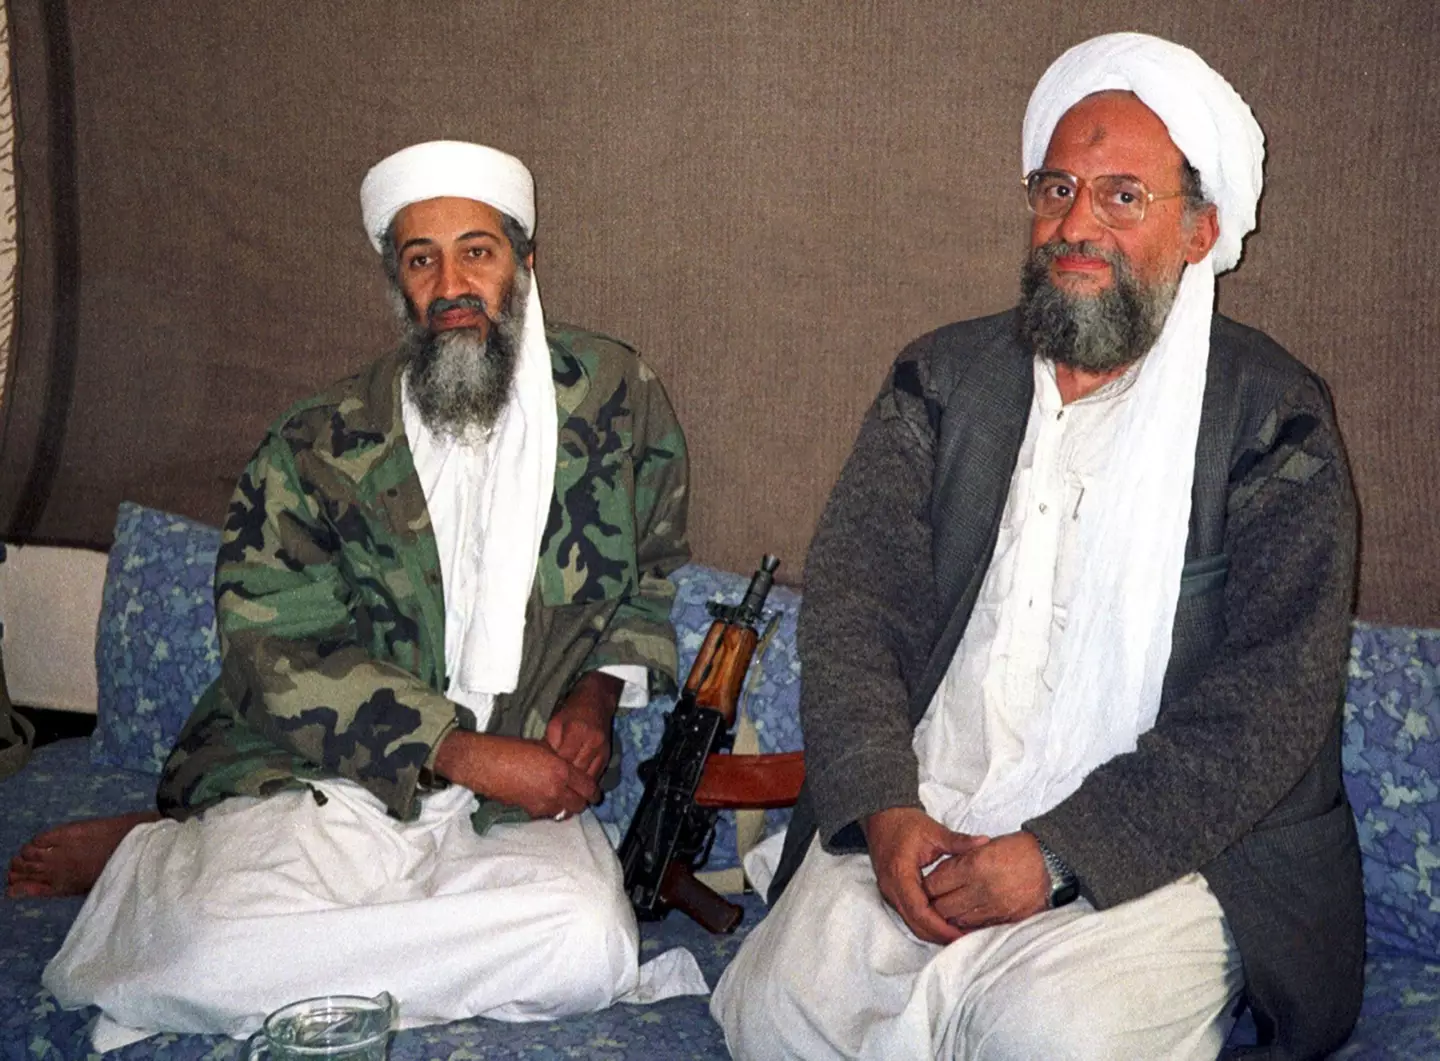 Ayman al-Zawahiri was the right-hand man of Osama Bin Laden and helped plot the 9/11 terror attacks.